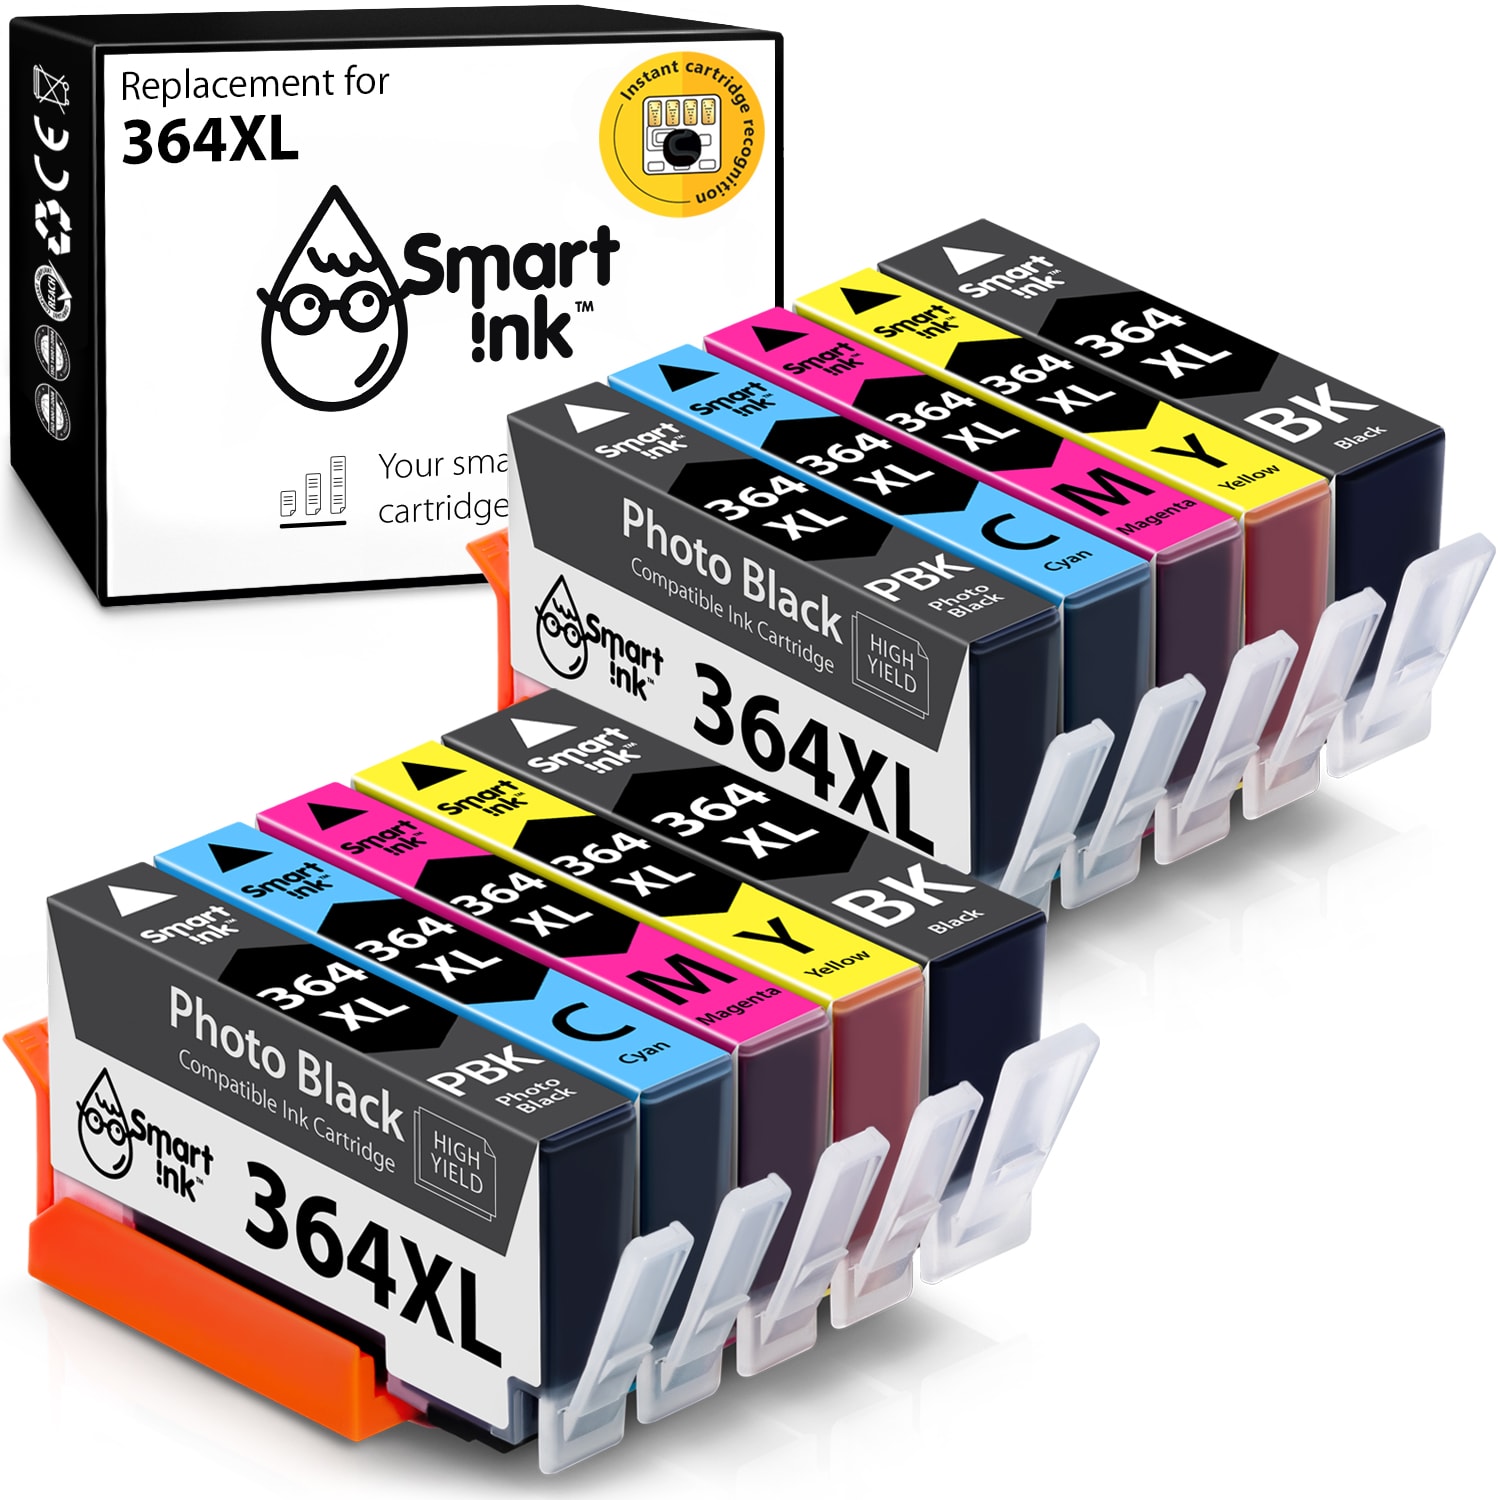 HP 364 XL (Photo Black) Cartridge Replacement - Buy Printer Cartridges in Europe at best price | Smart